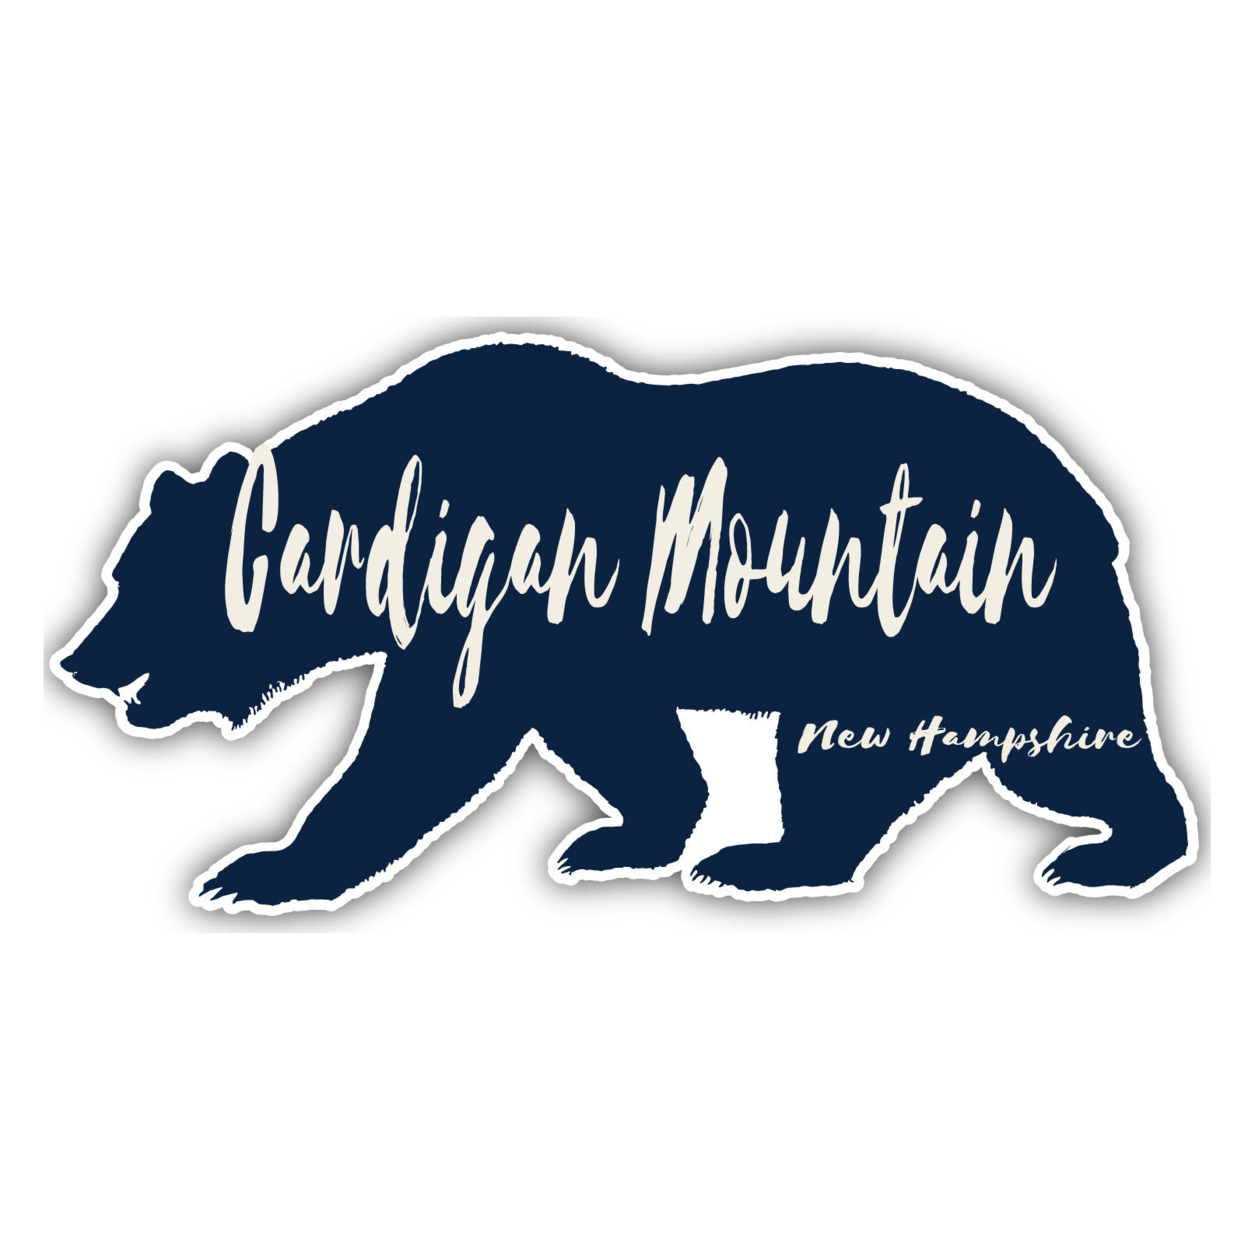 Cardigan Mountain New Hampshire Souvenir Decorative Stickers (Choose Theme And Size) - Single Unit, 2-Inch, Bear